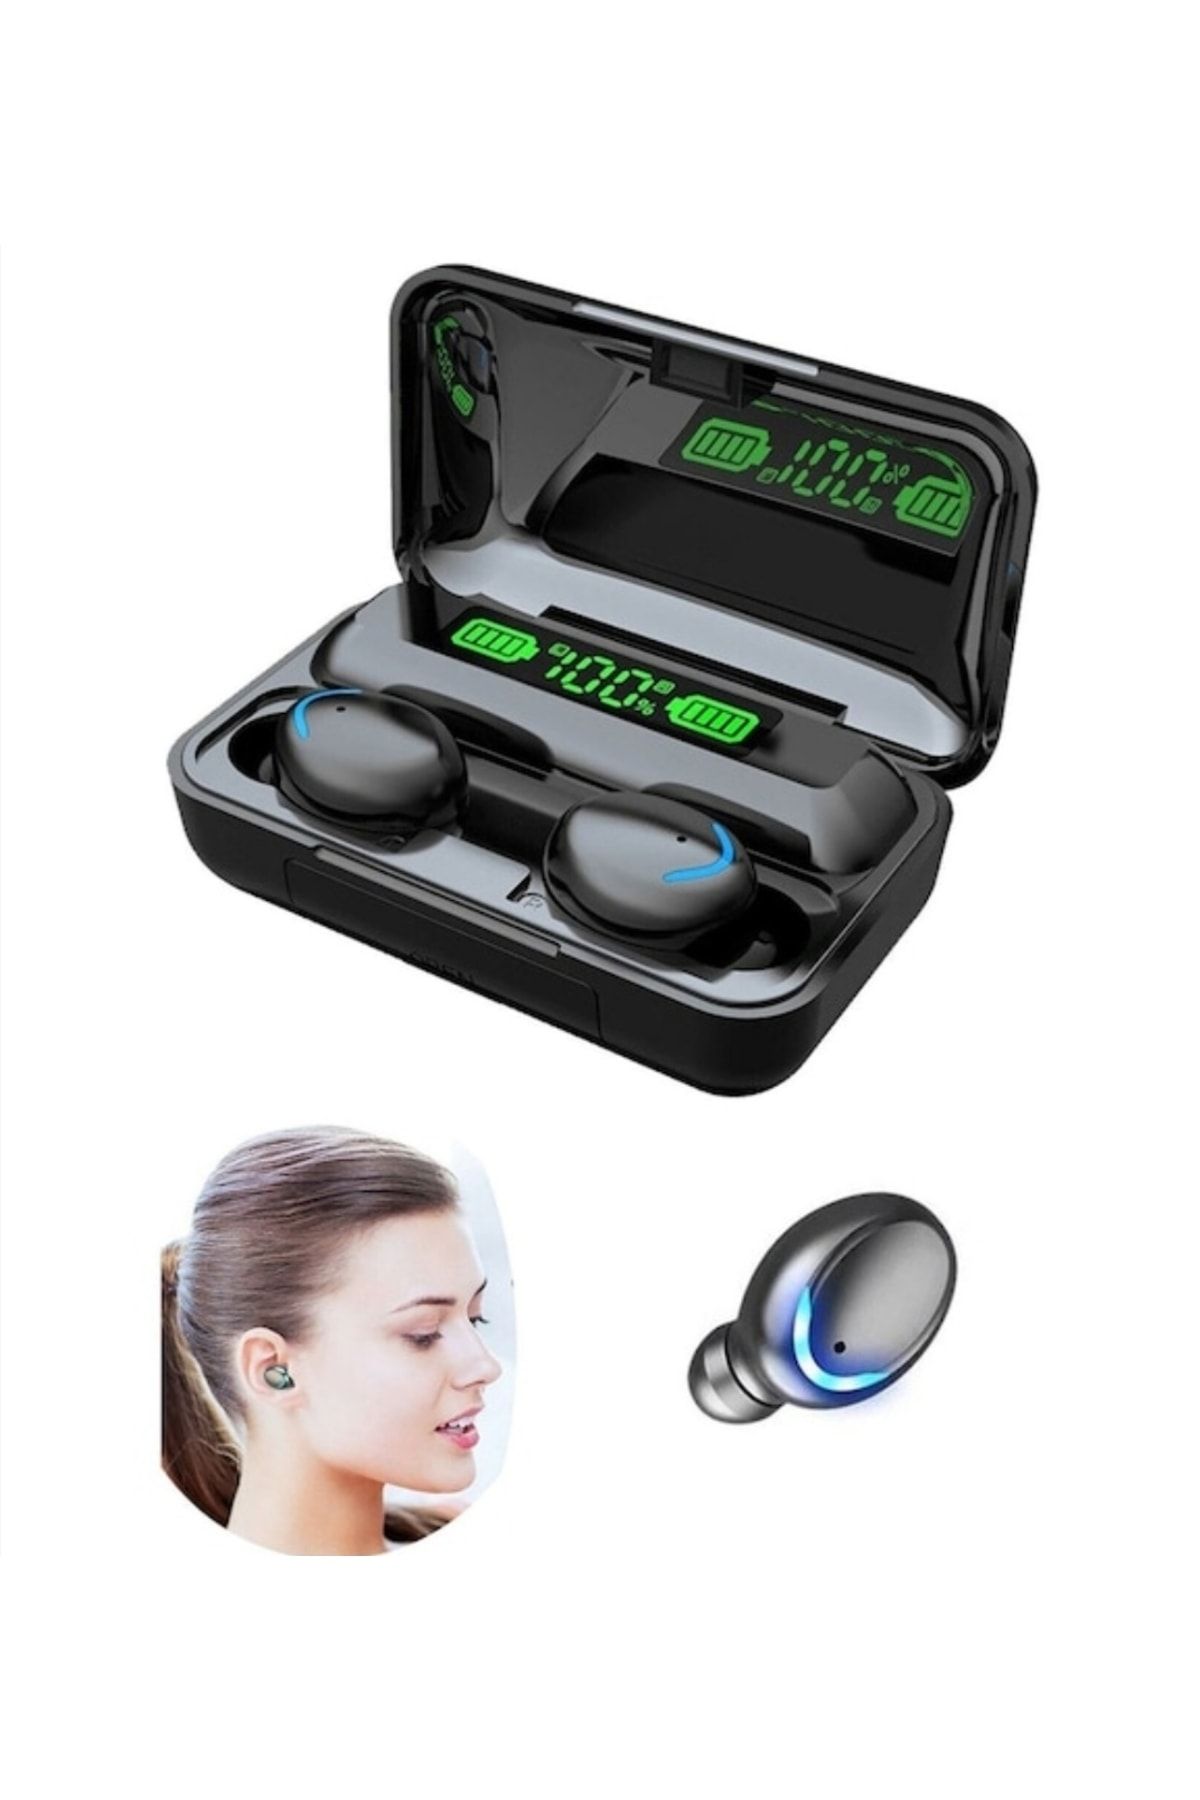 İMEXTECH F9-5 Tws Kablosuz Bluetooth 5.0 Mikrofonlu Dokunmatik Kulaklık